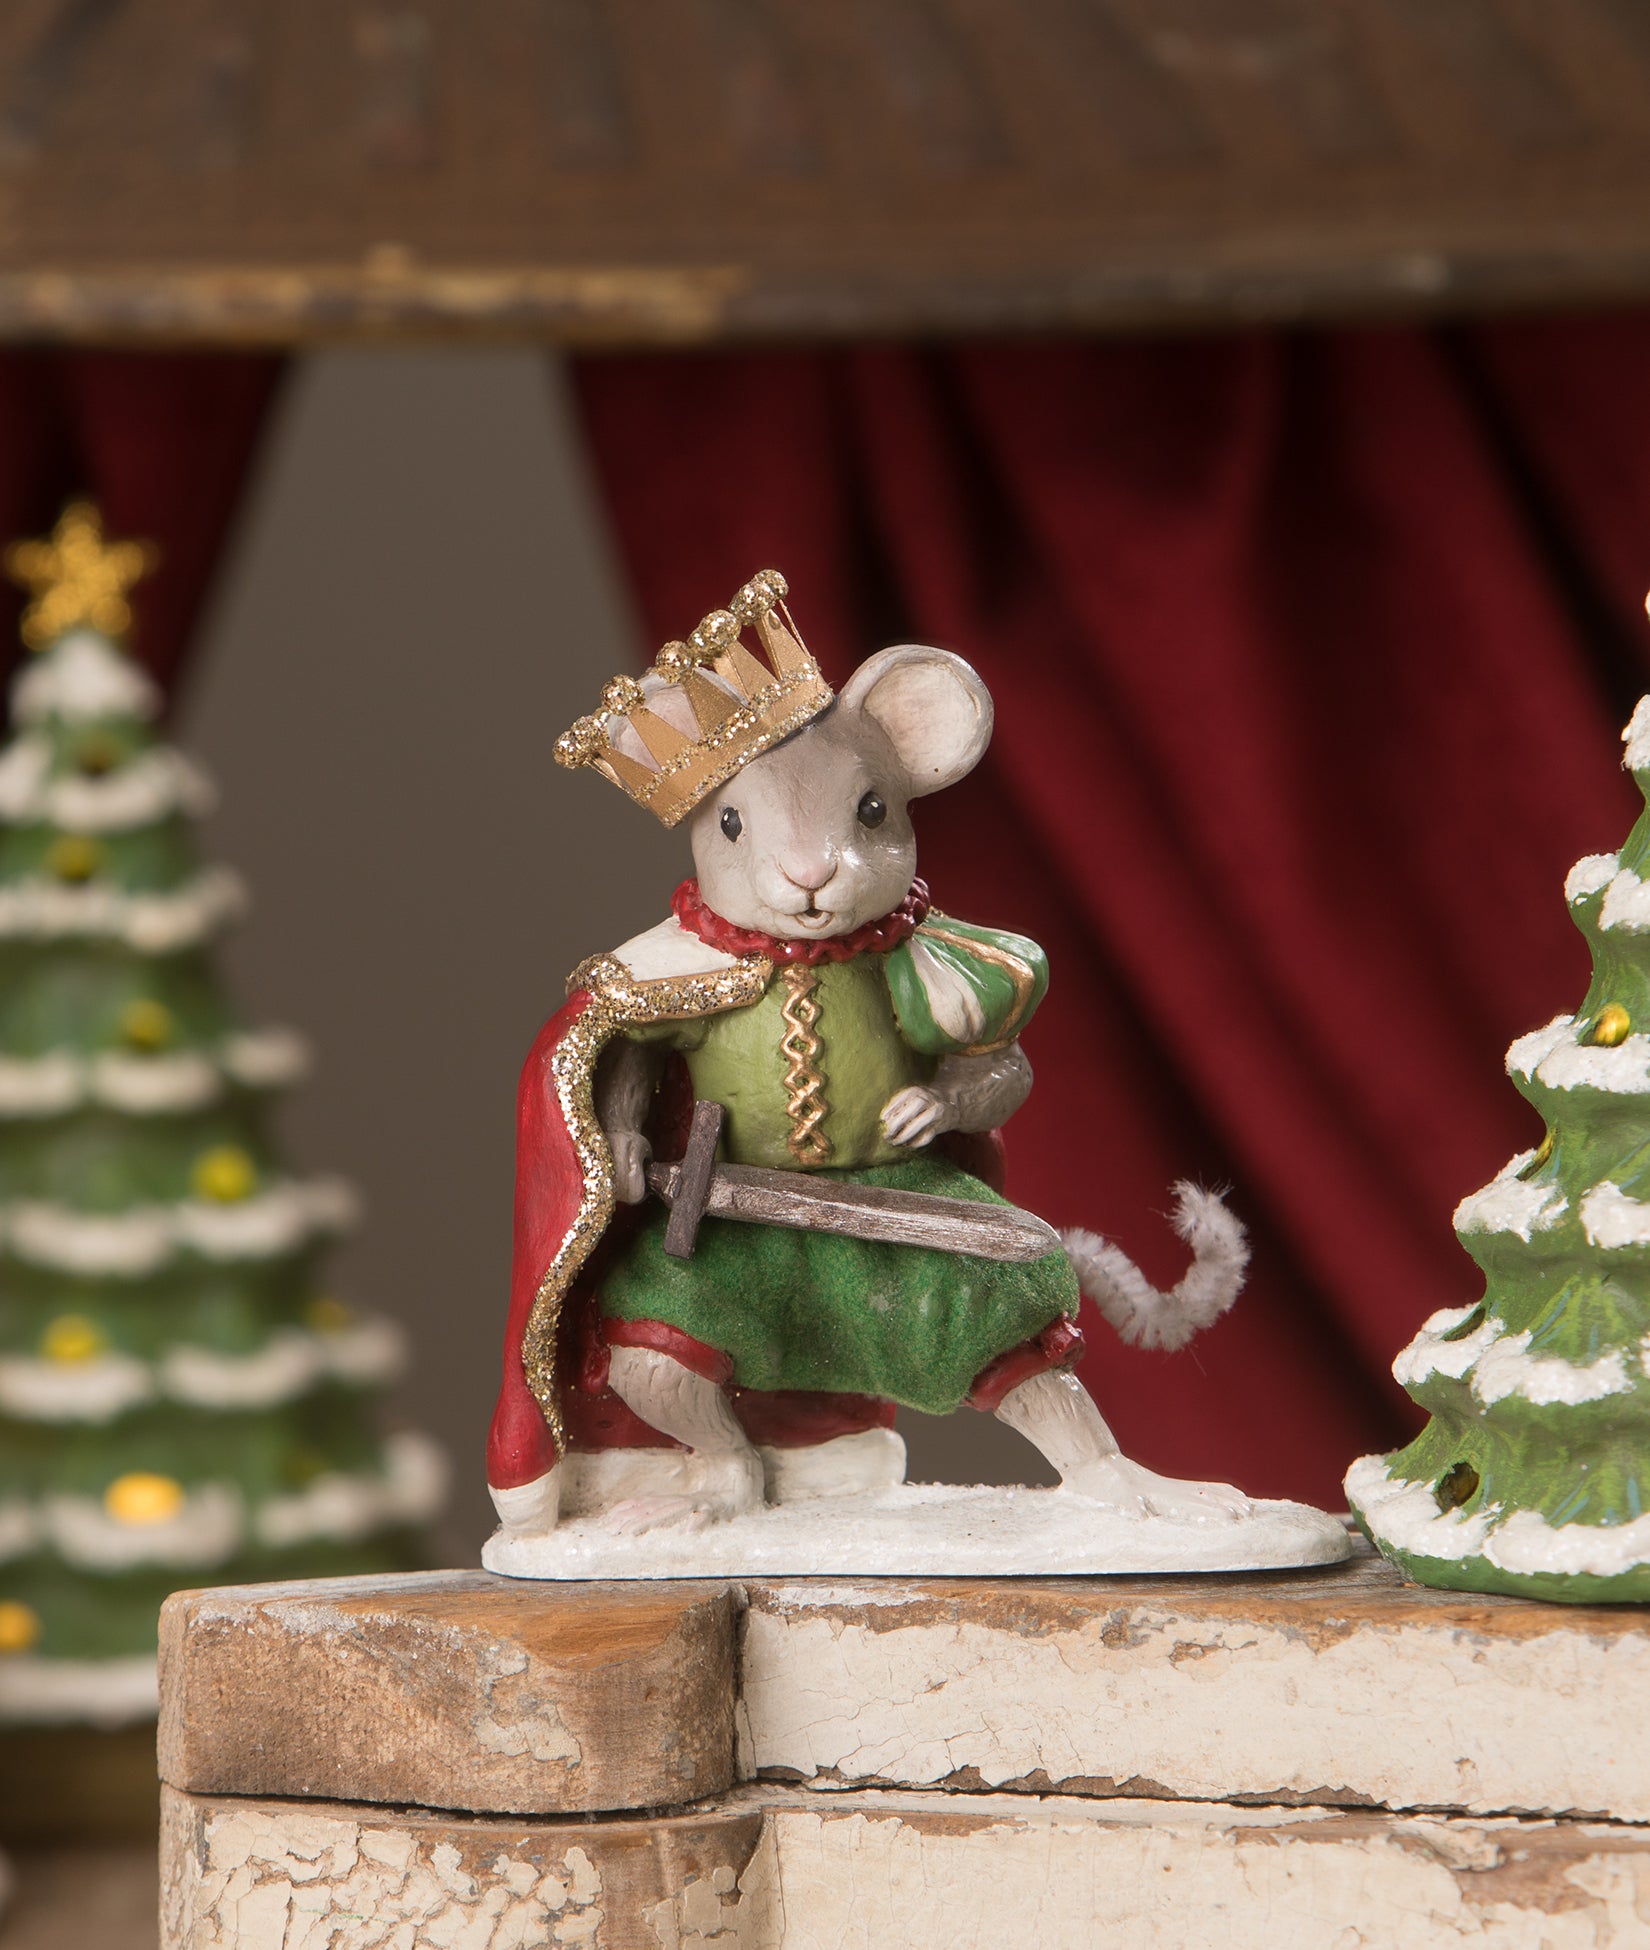 The Mouse King Nutcracker Ballet Figurine